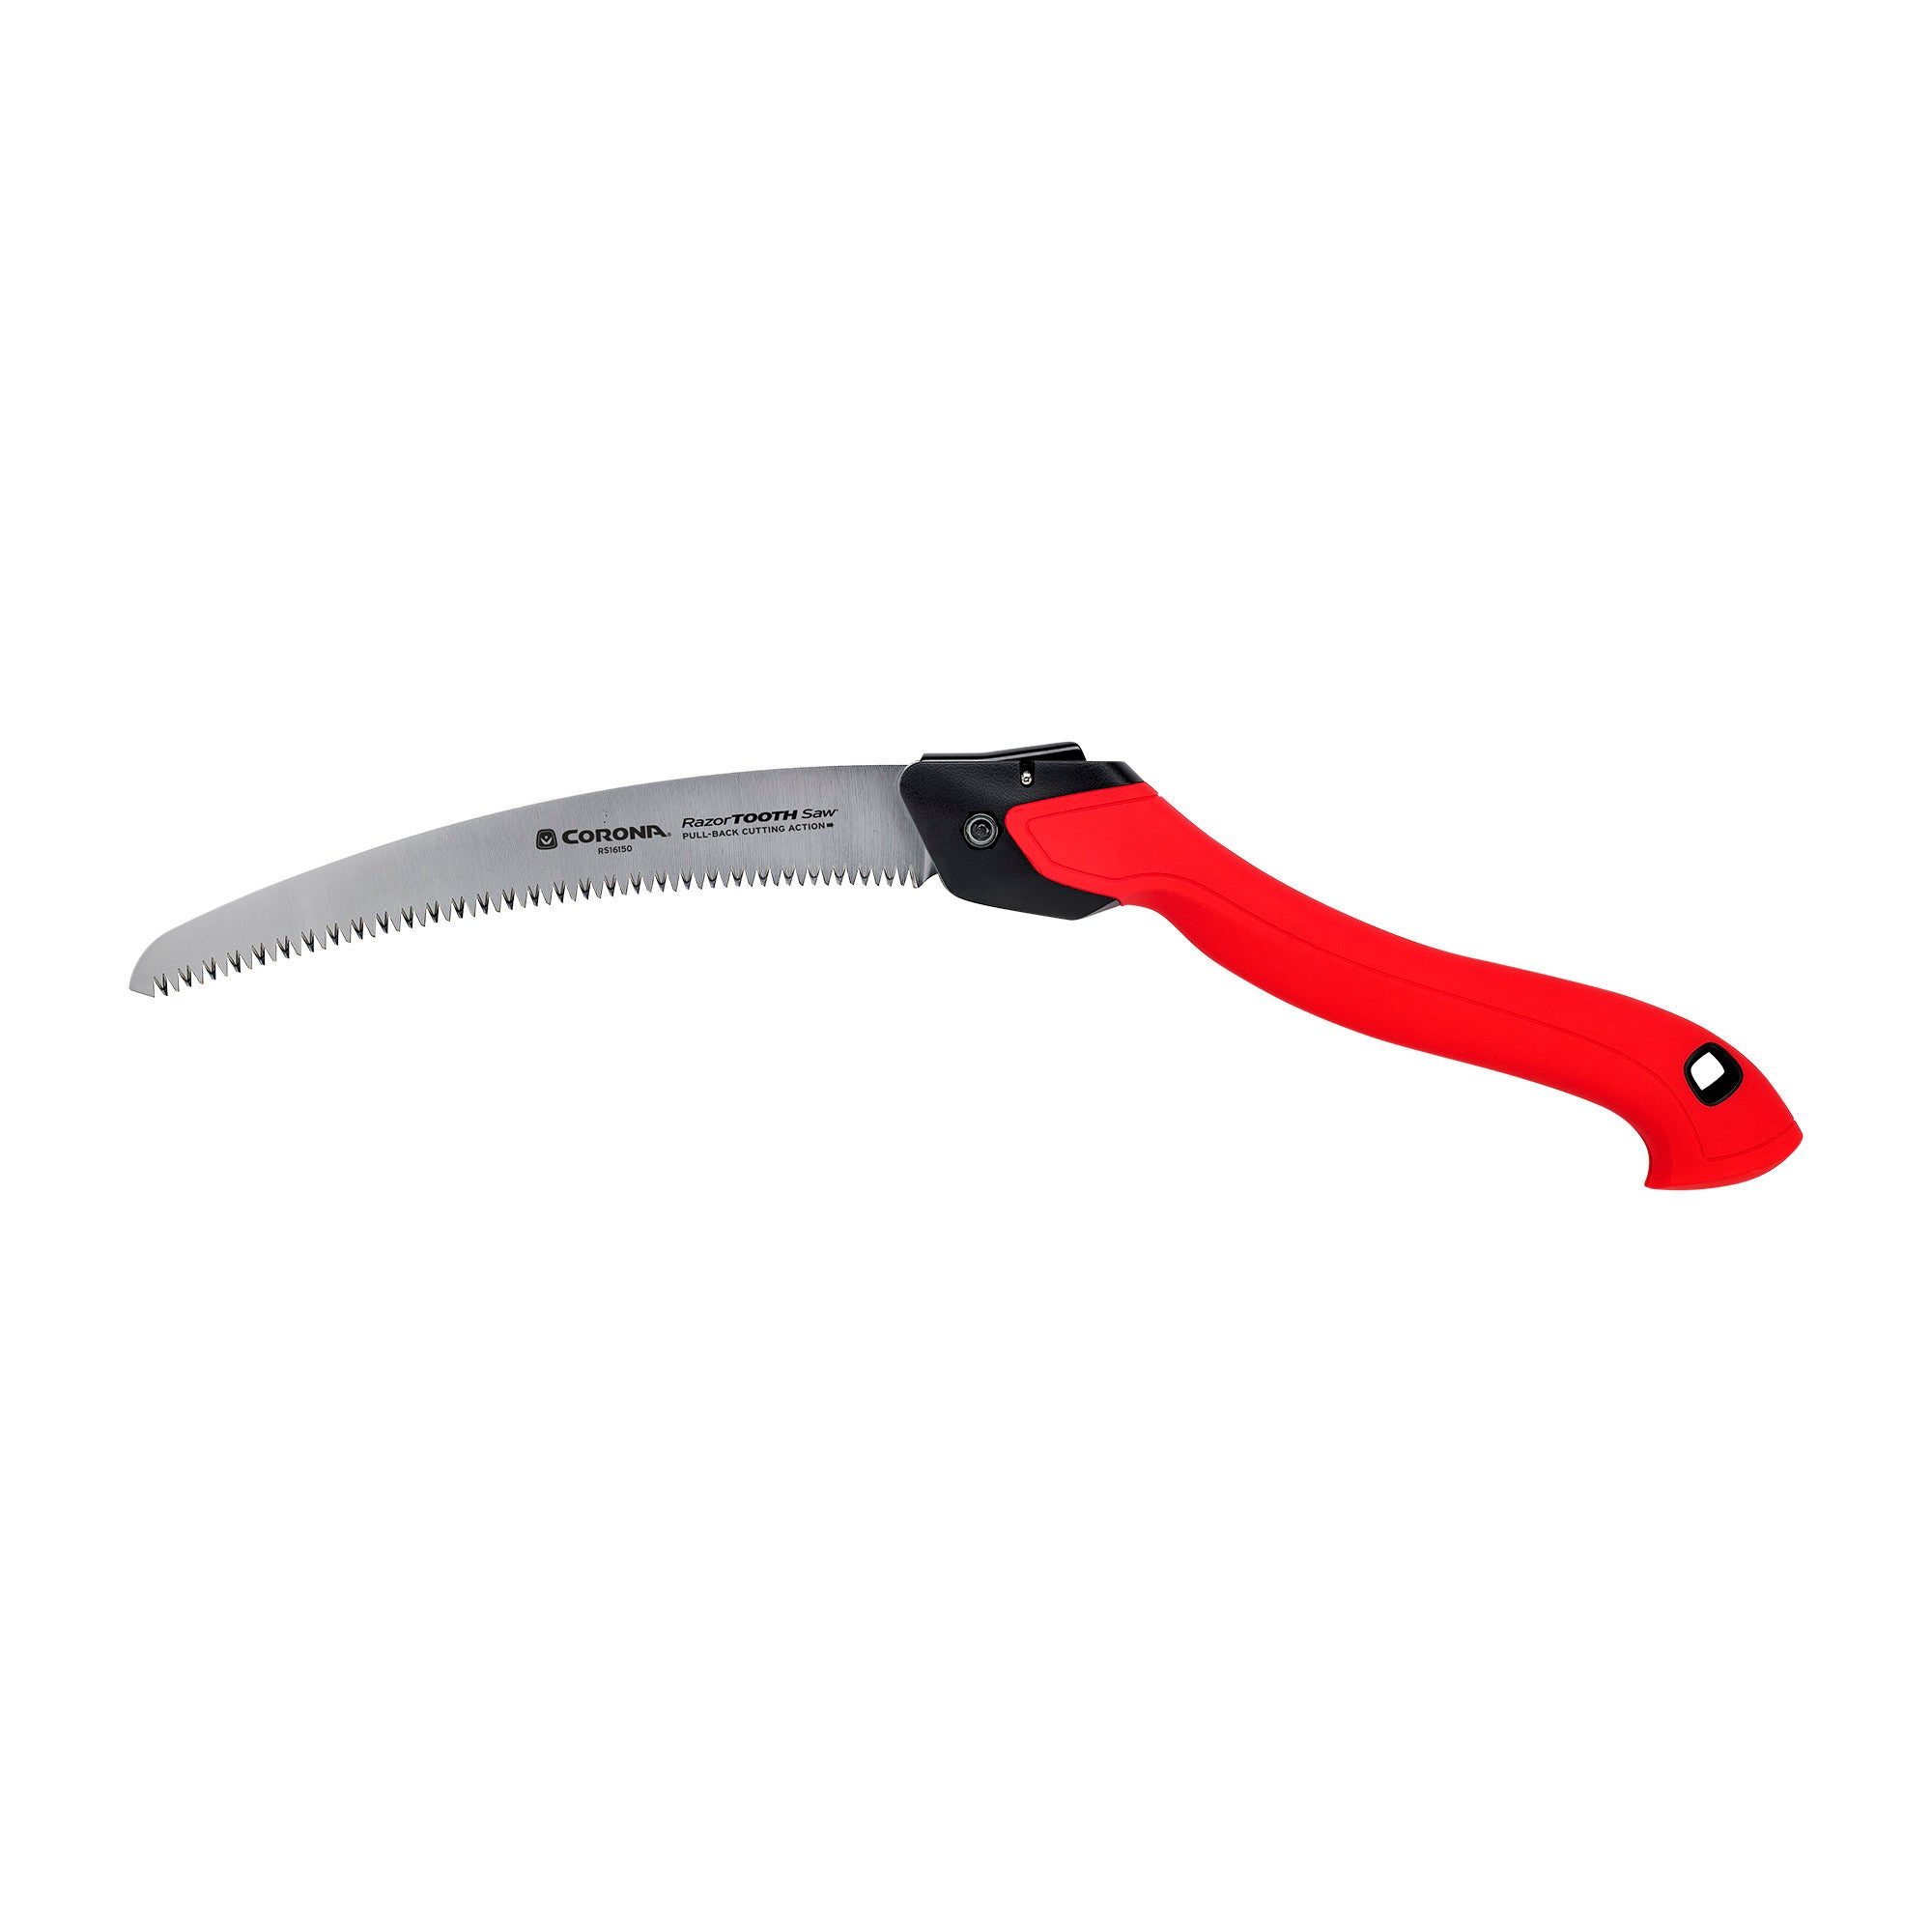 RazorTOOTH Saw™ Folding Pruning Saw, 10 in. Blade